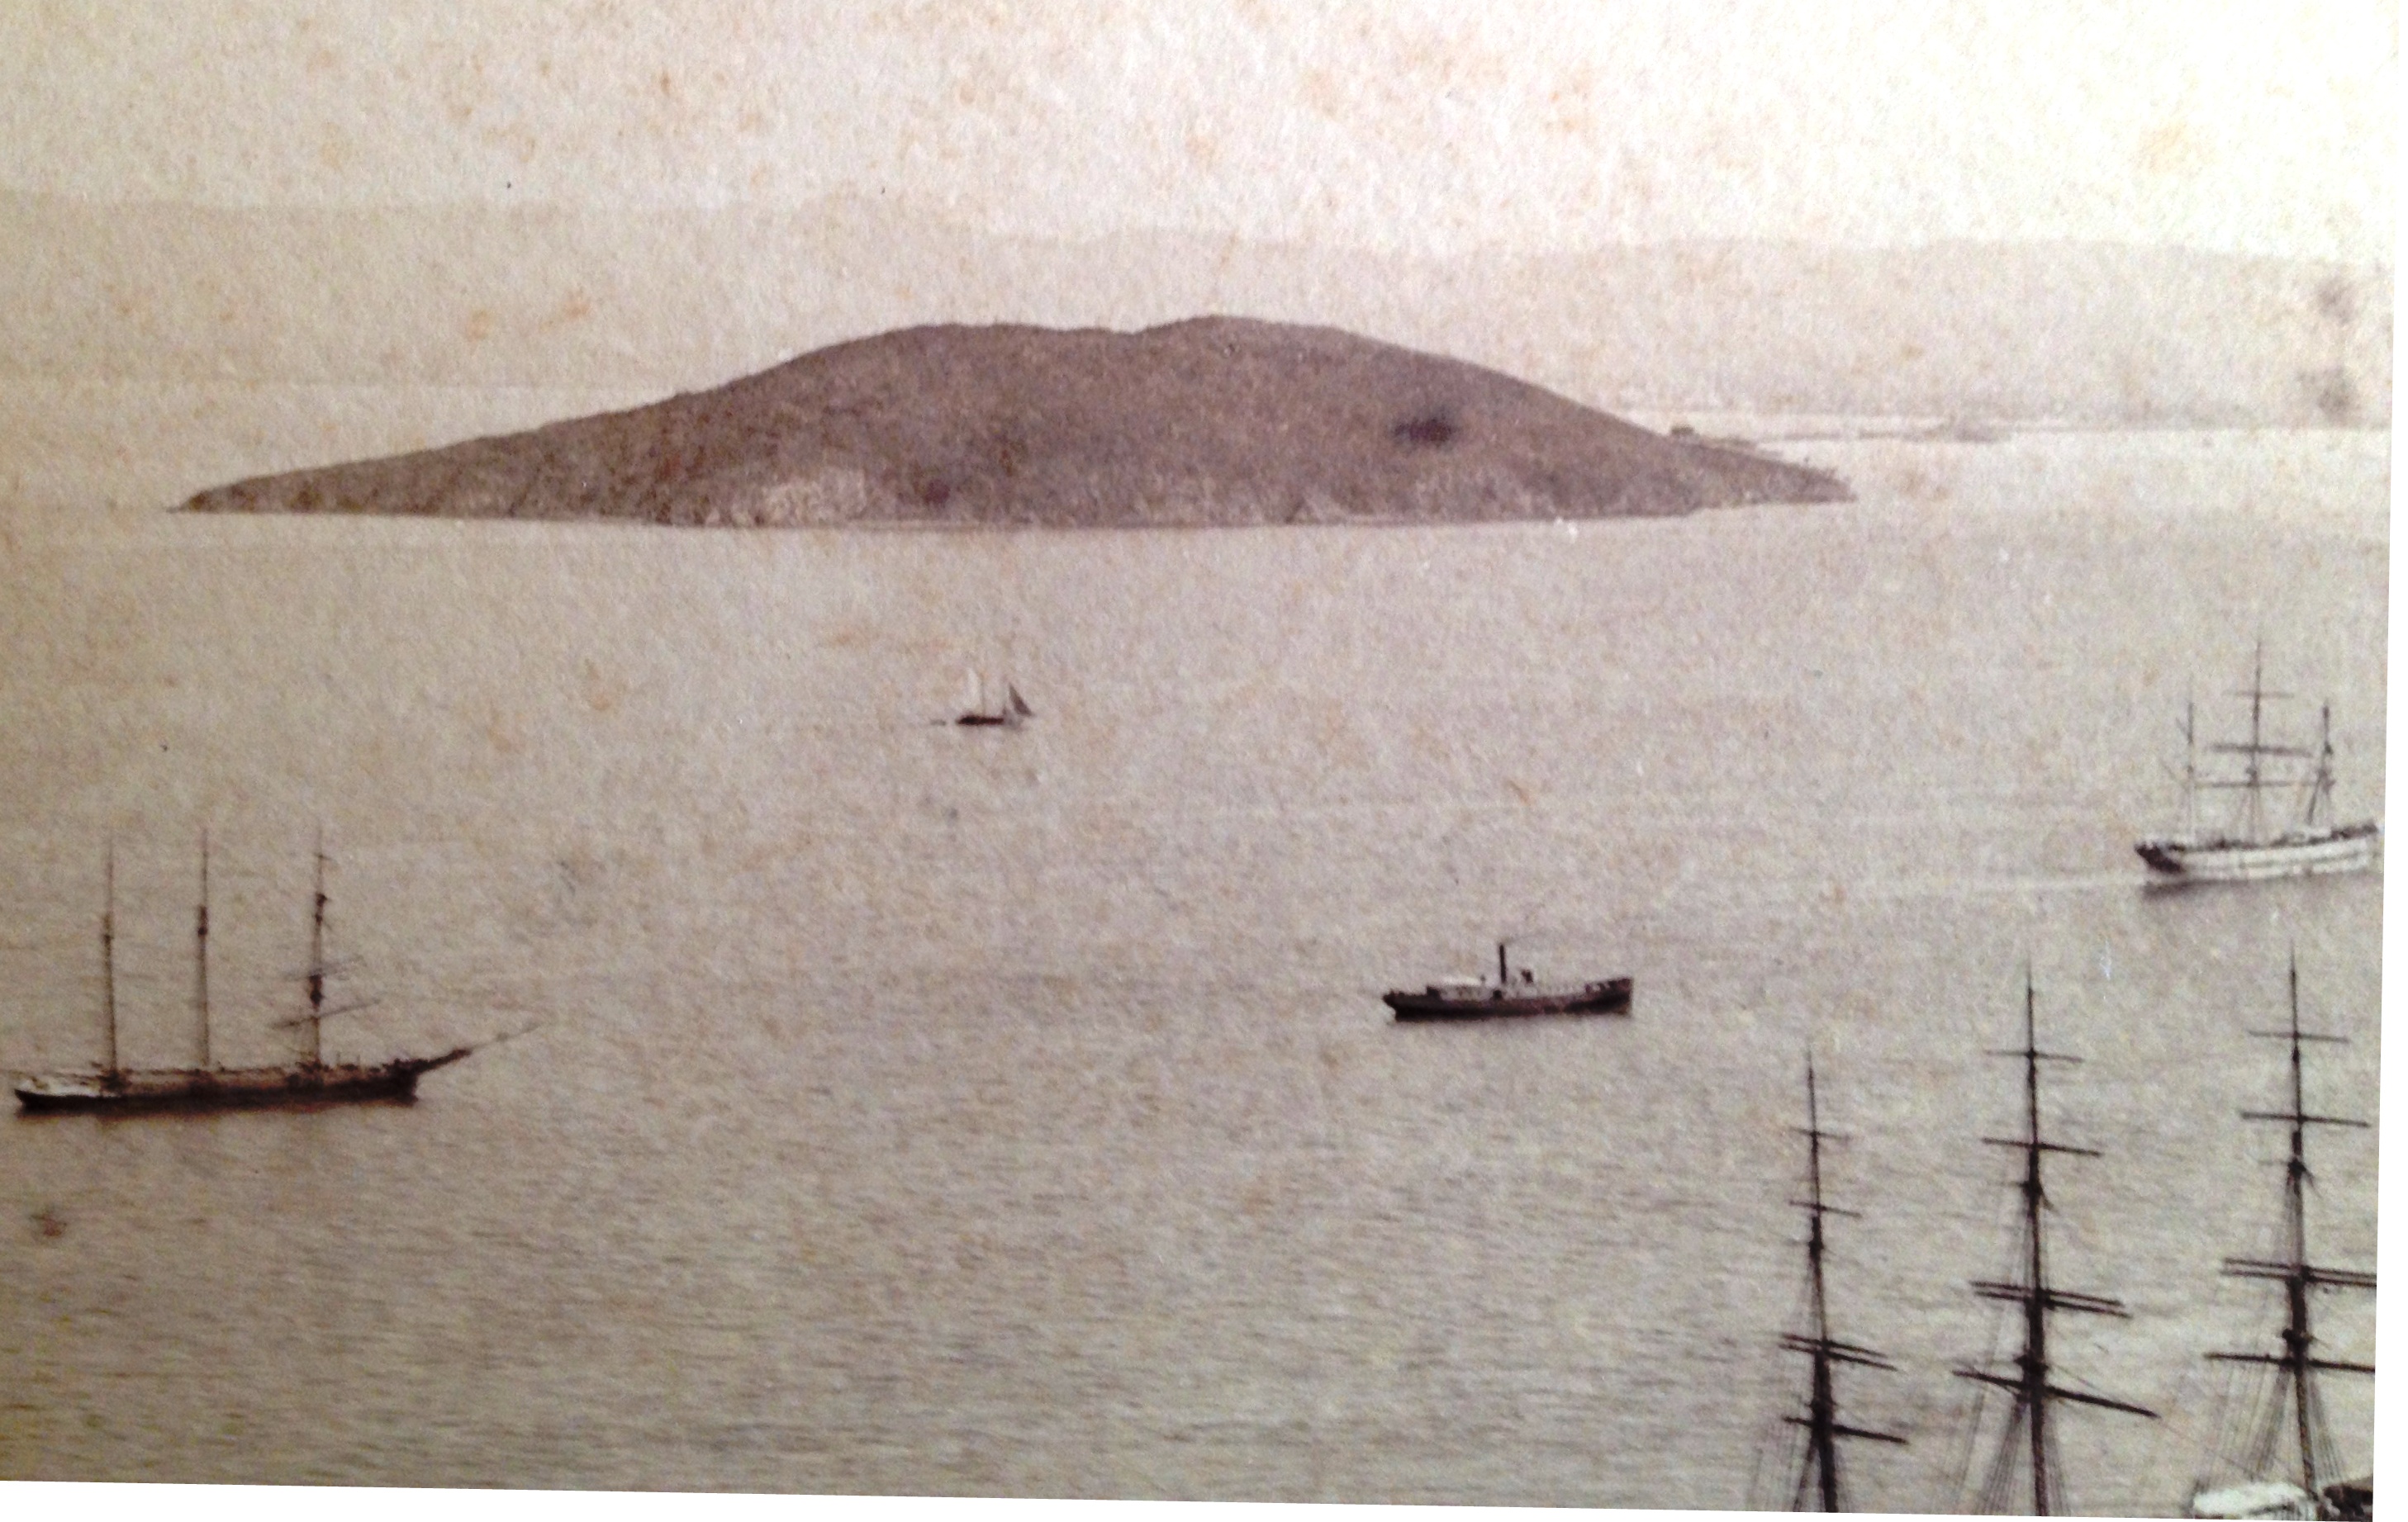 Photo of San Francisco Harbor c1865